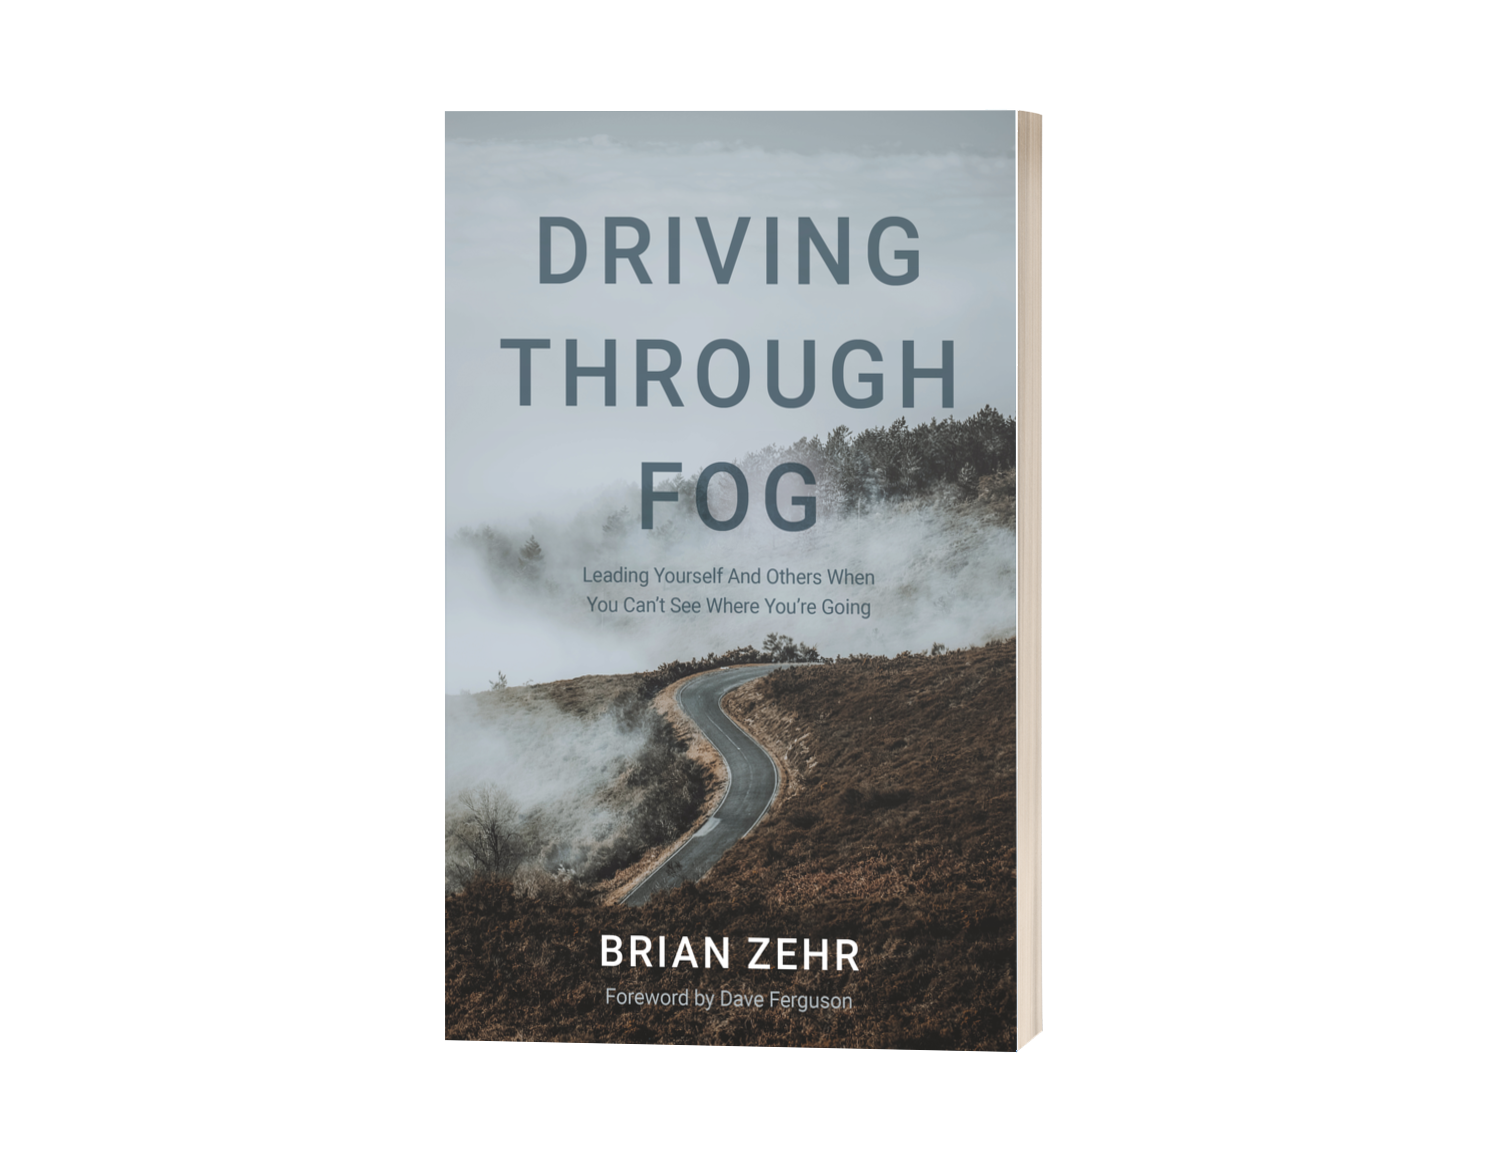 link:https://www.amazon.com/Driving-Through-Fog-Leading-Yourself/dp/B0CDFNSHRY